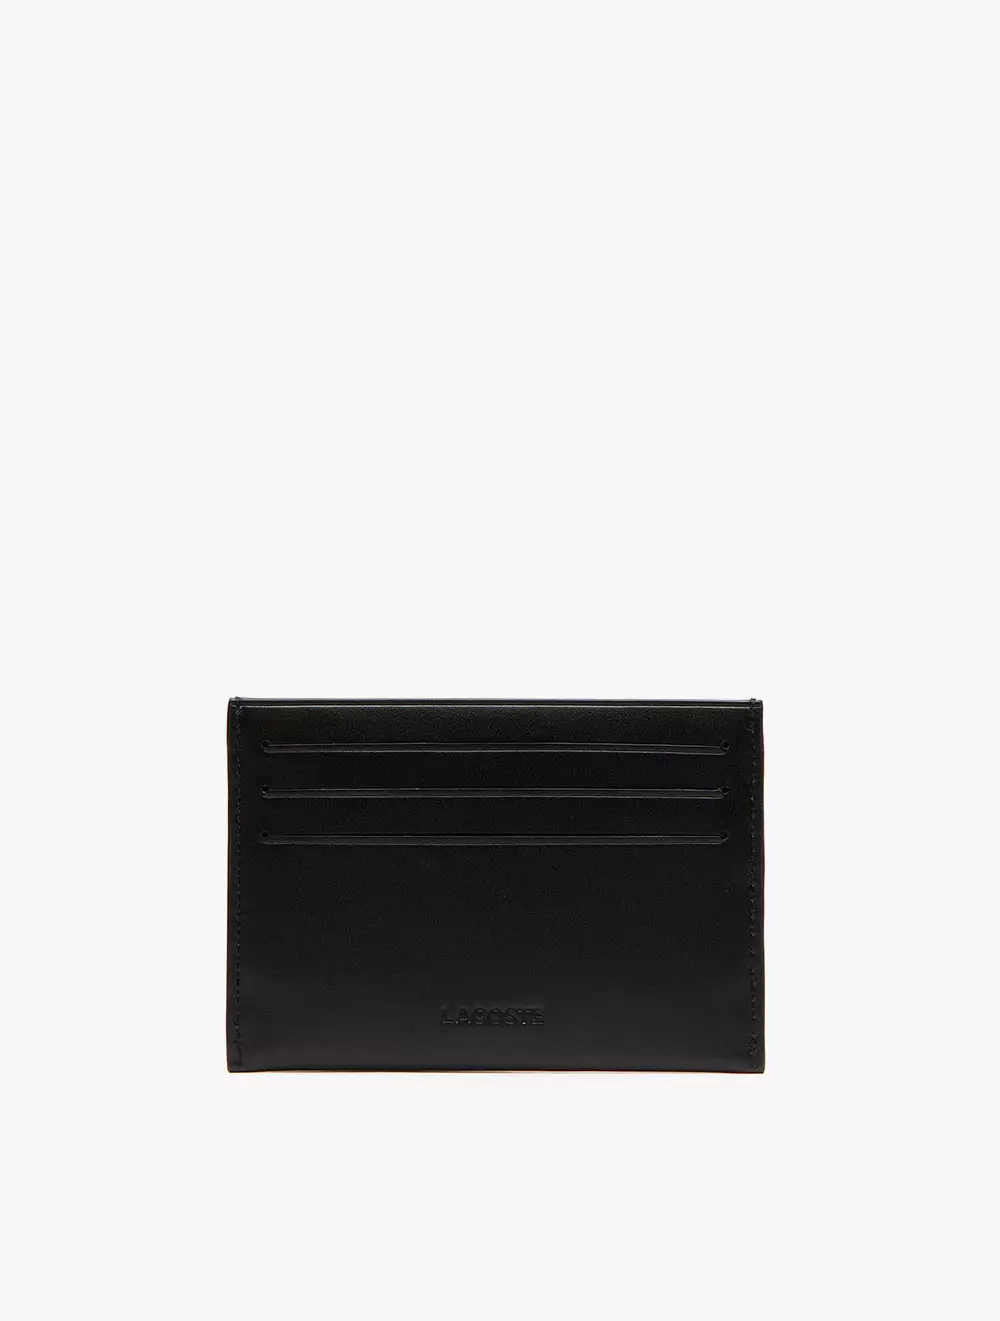 Jual Lacoste Men's Fitzgerald credit card holder in leather - Black ...